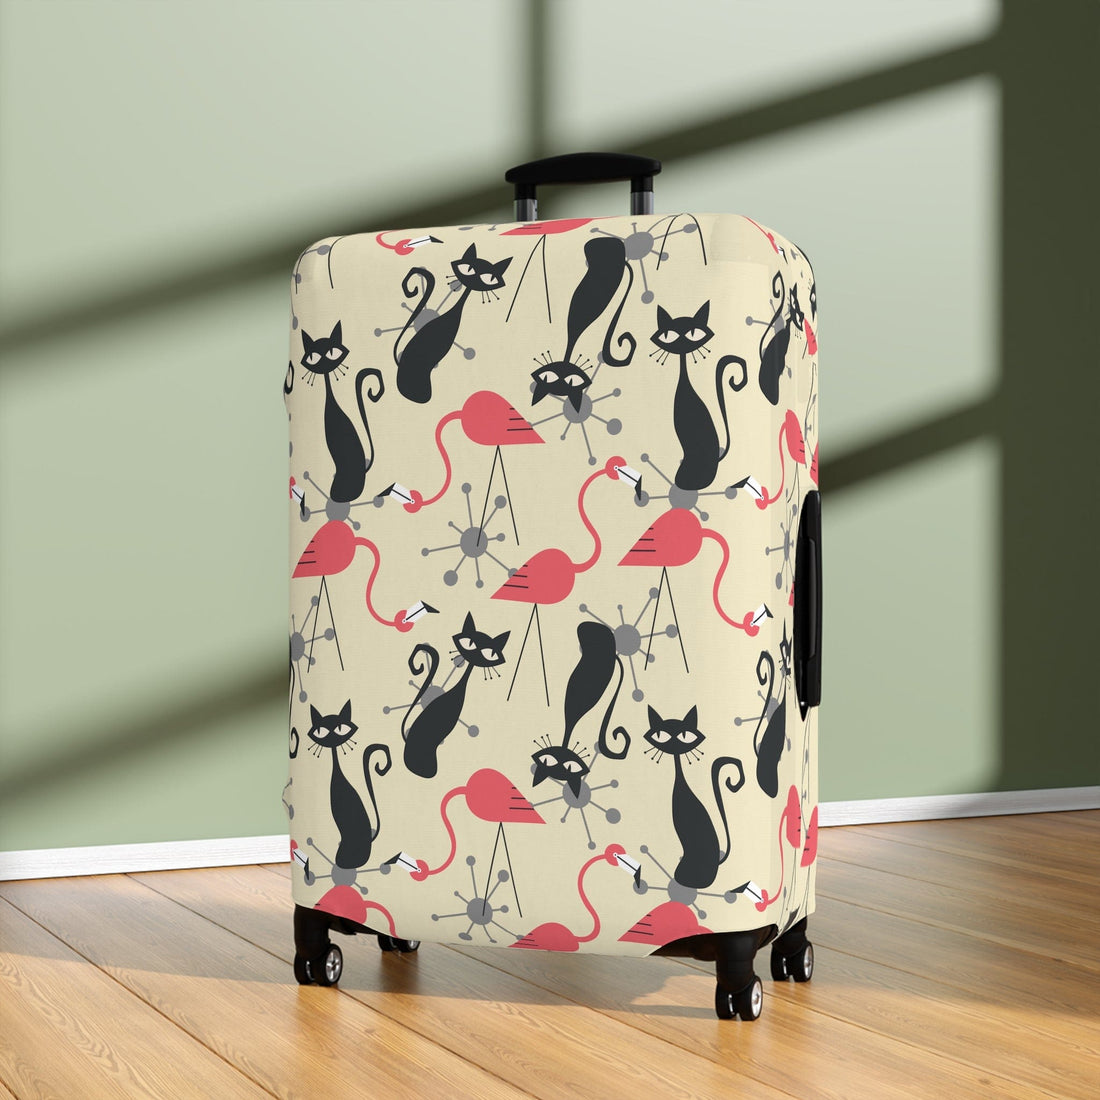 Kate McEnroe New York Atomic Cat, Flamingo Mid Century Modern Luggage Cover, Retro Whimsy MCM Starburst Cream, Pink, Gray Suitcase ProtectorLuggage Covers27294178115495763605